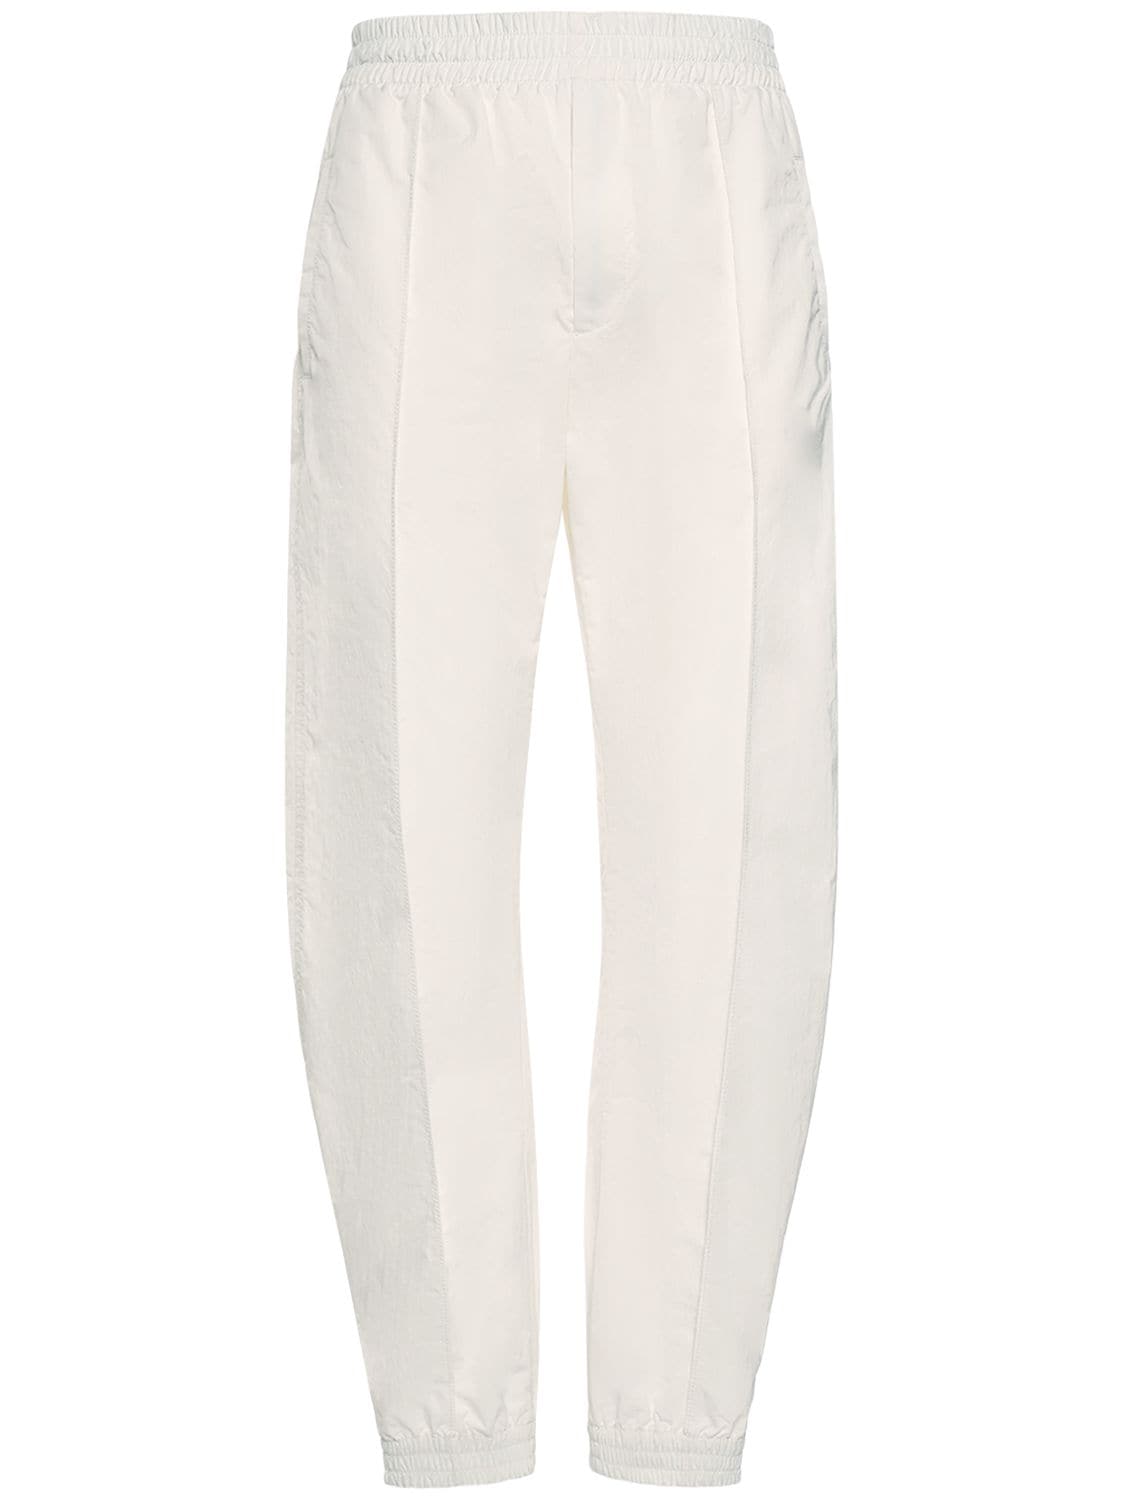 Image of Elastic Waist Tech Nylon Pants